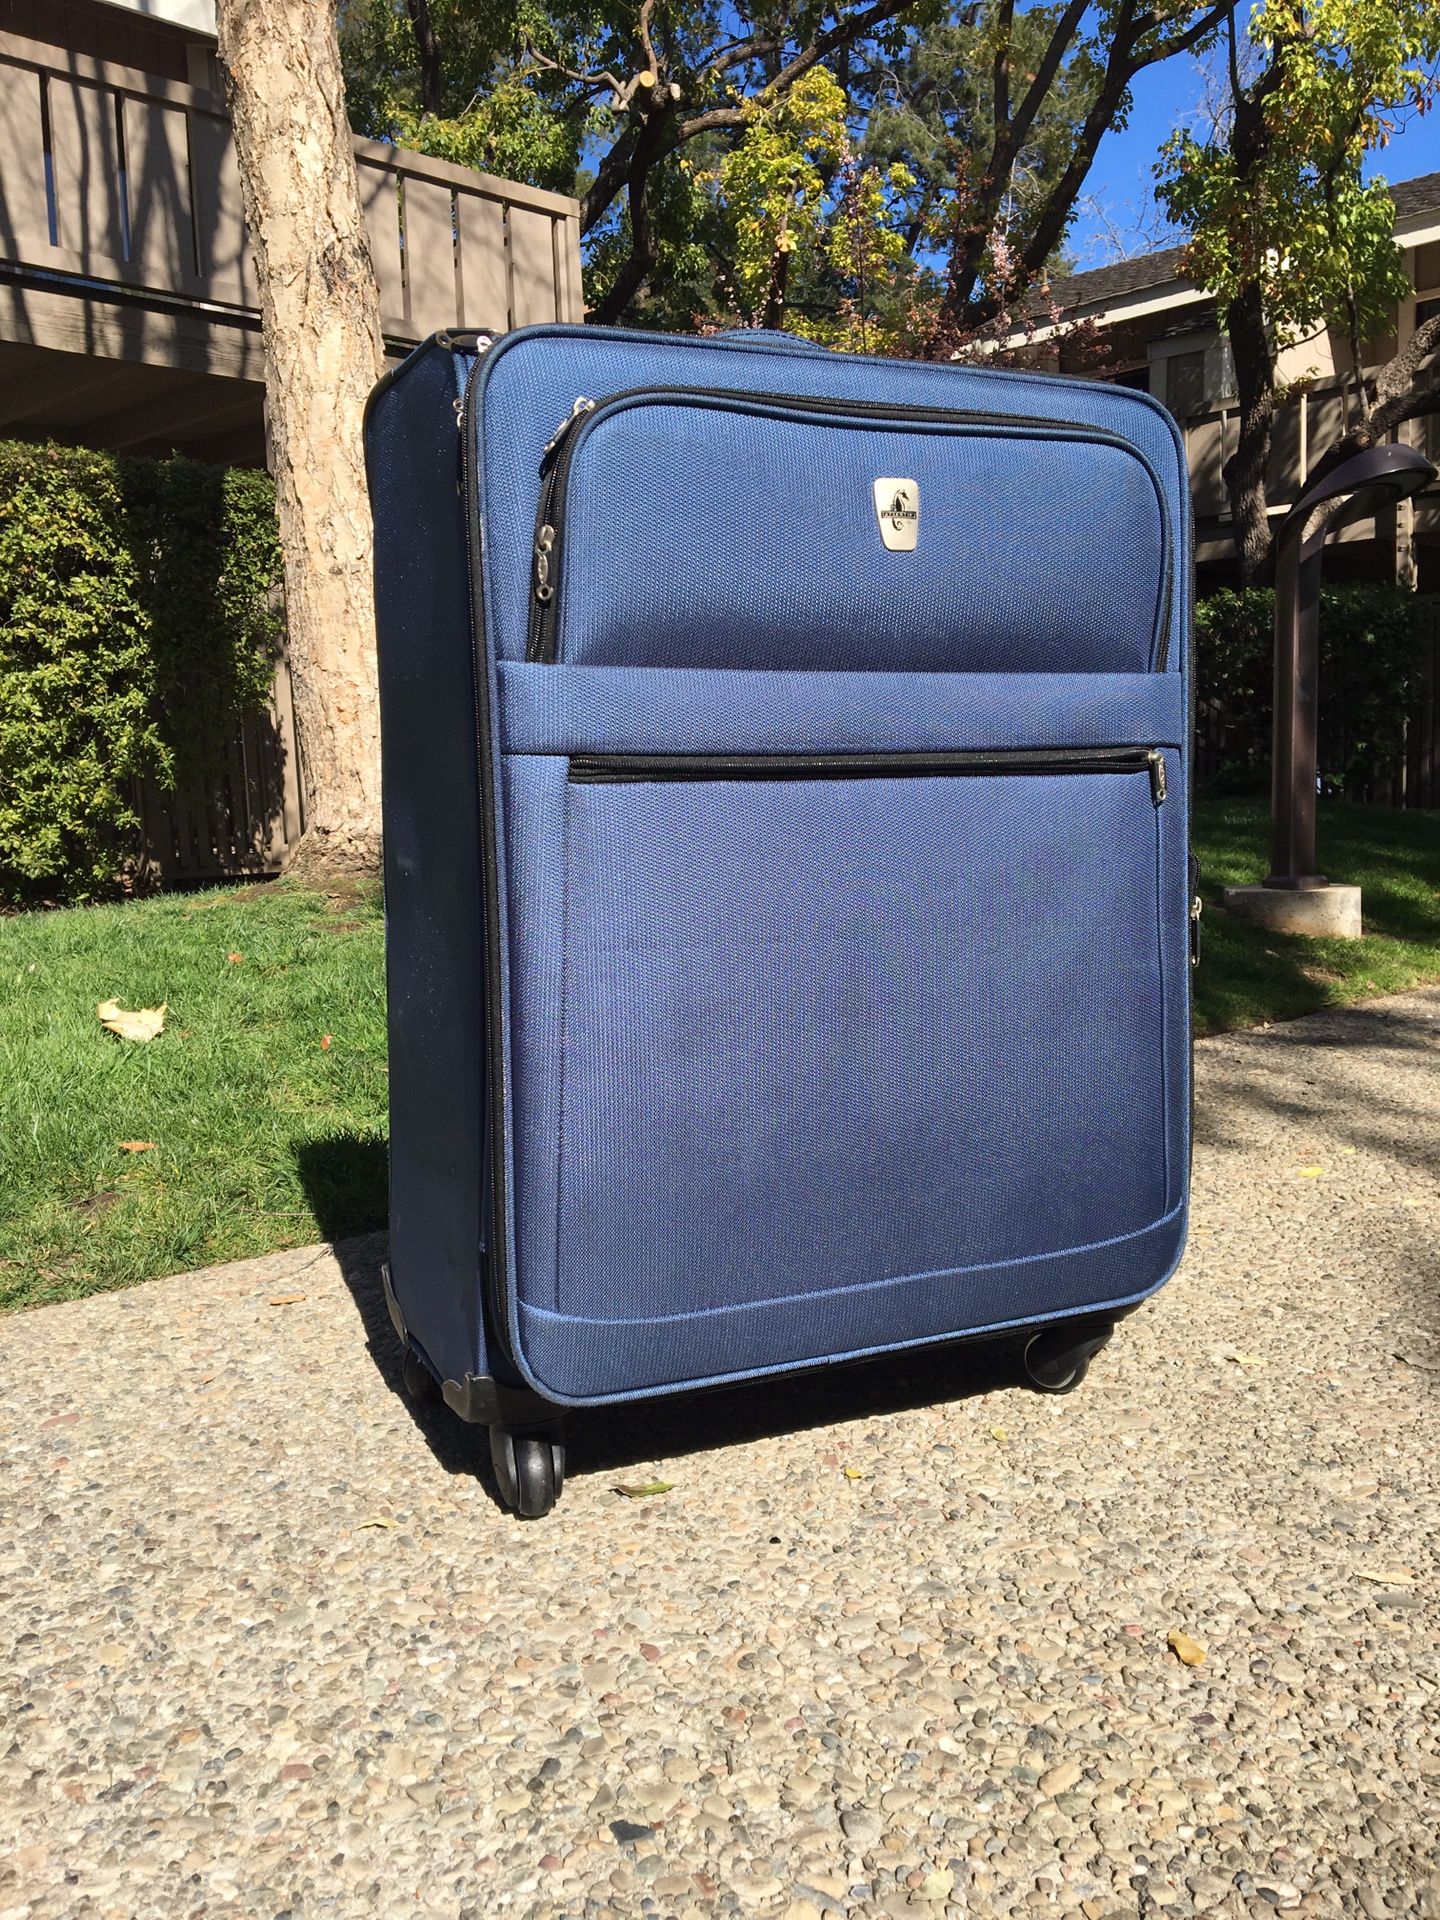 Large blue luggage suitcase with 4 wheels